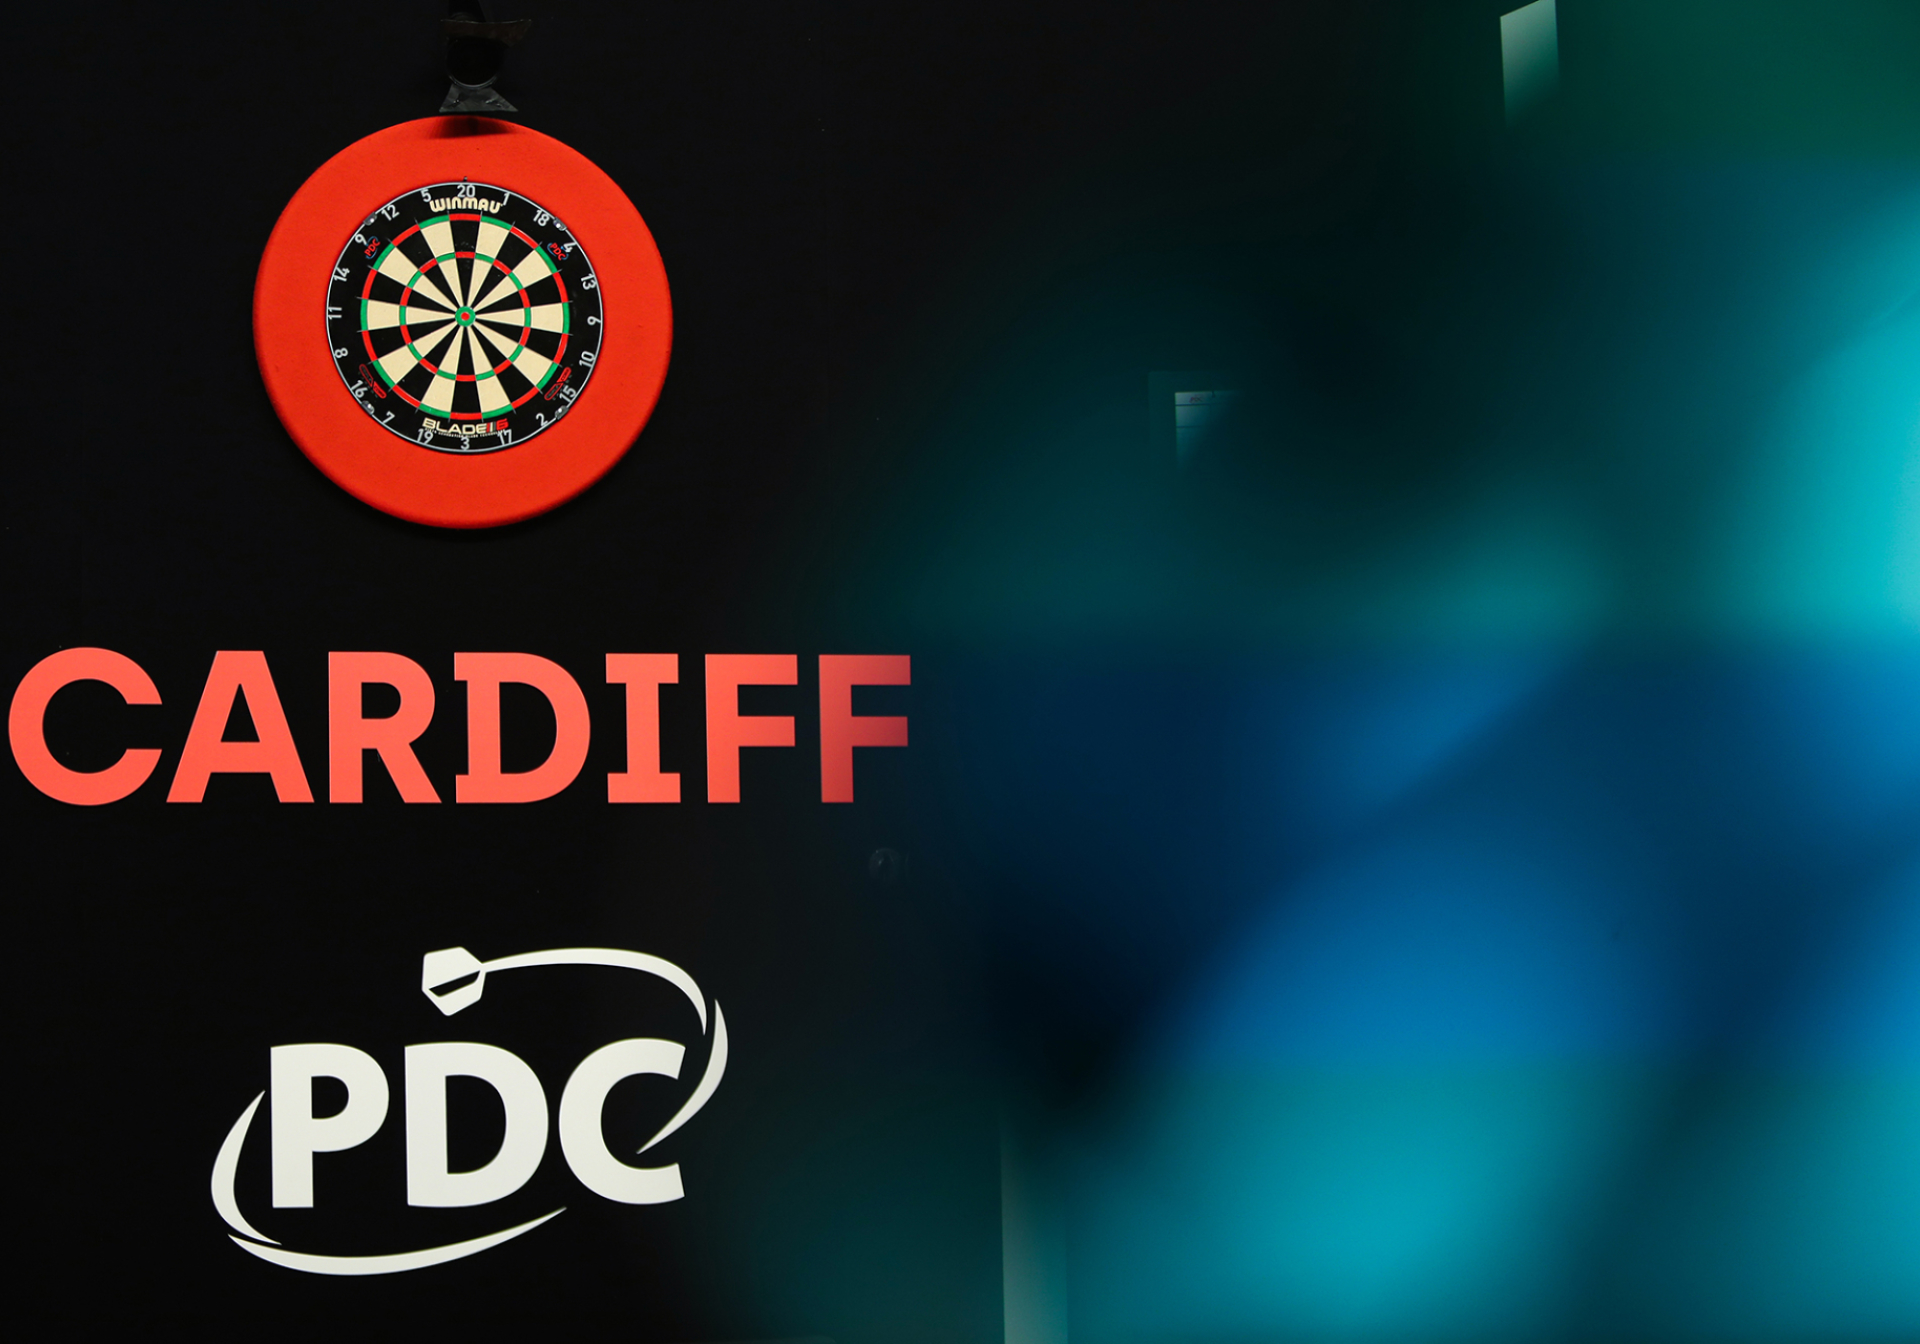 Cardiff Premier League stage (Kieran Cleeves/PDC)